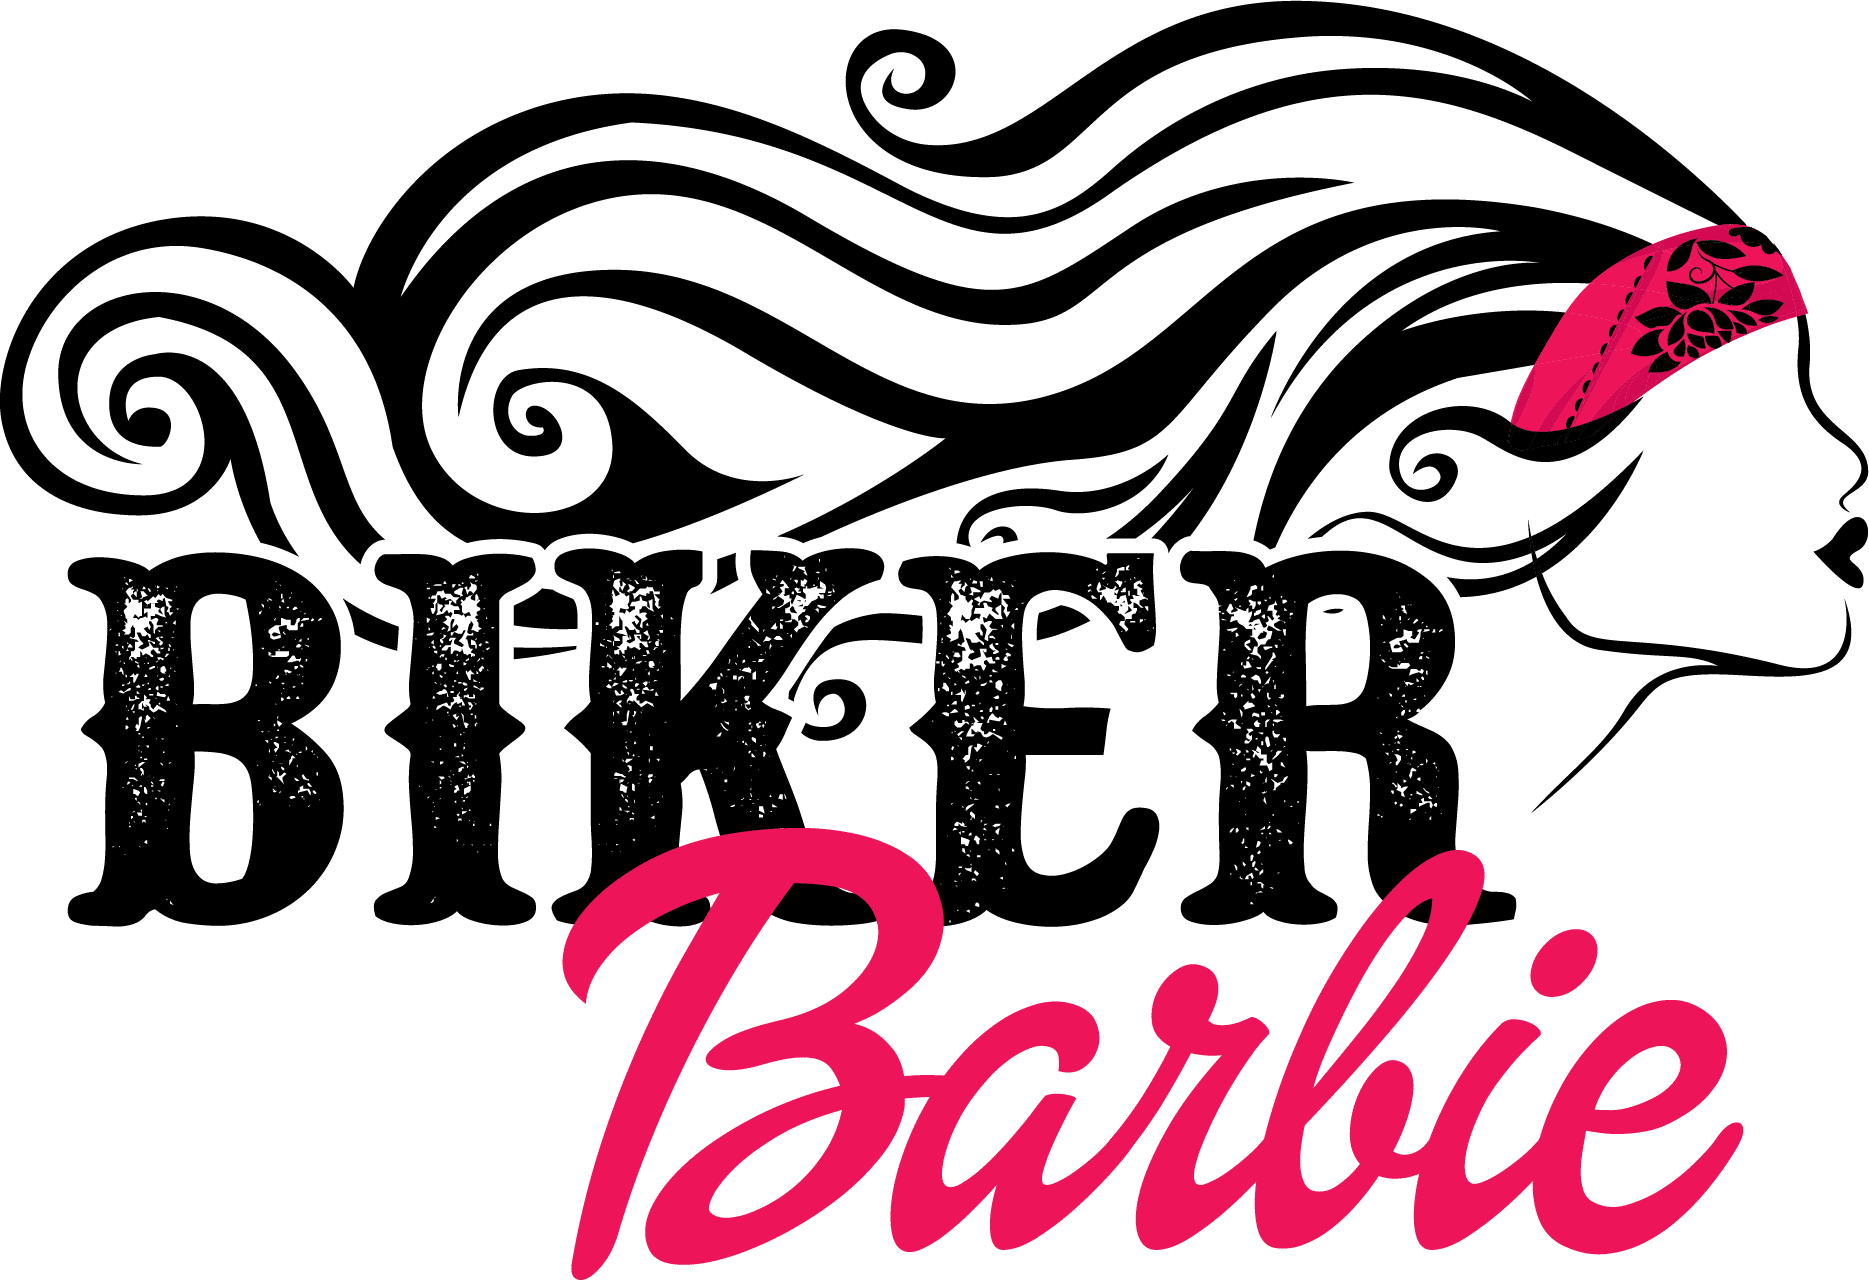 Barbie biker